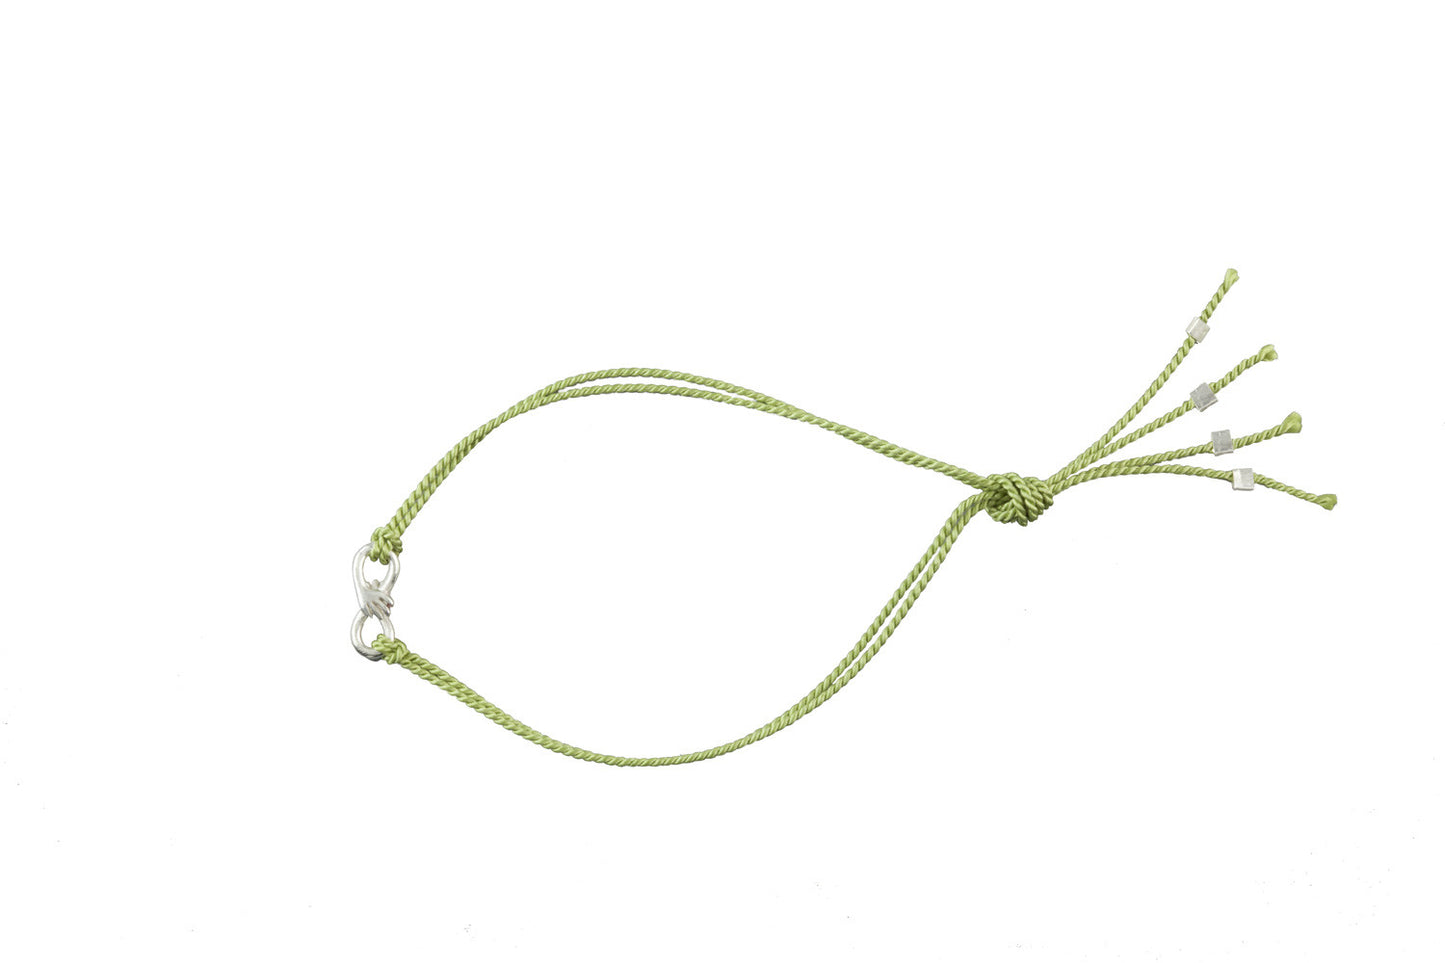 Cuddle charm bracelet on Olive green thread